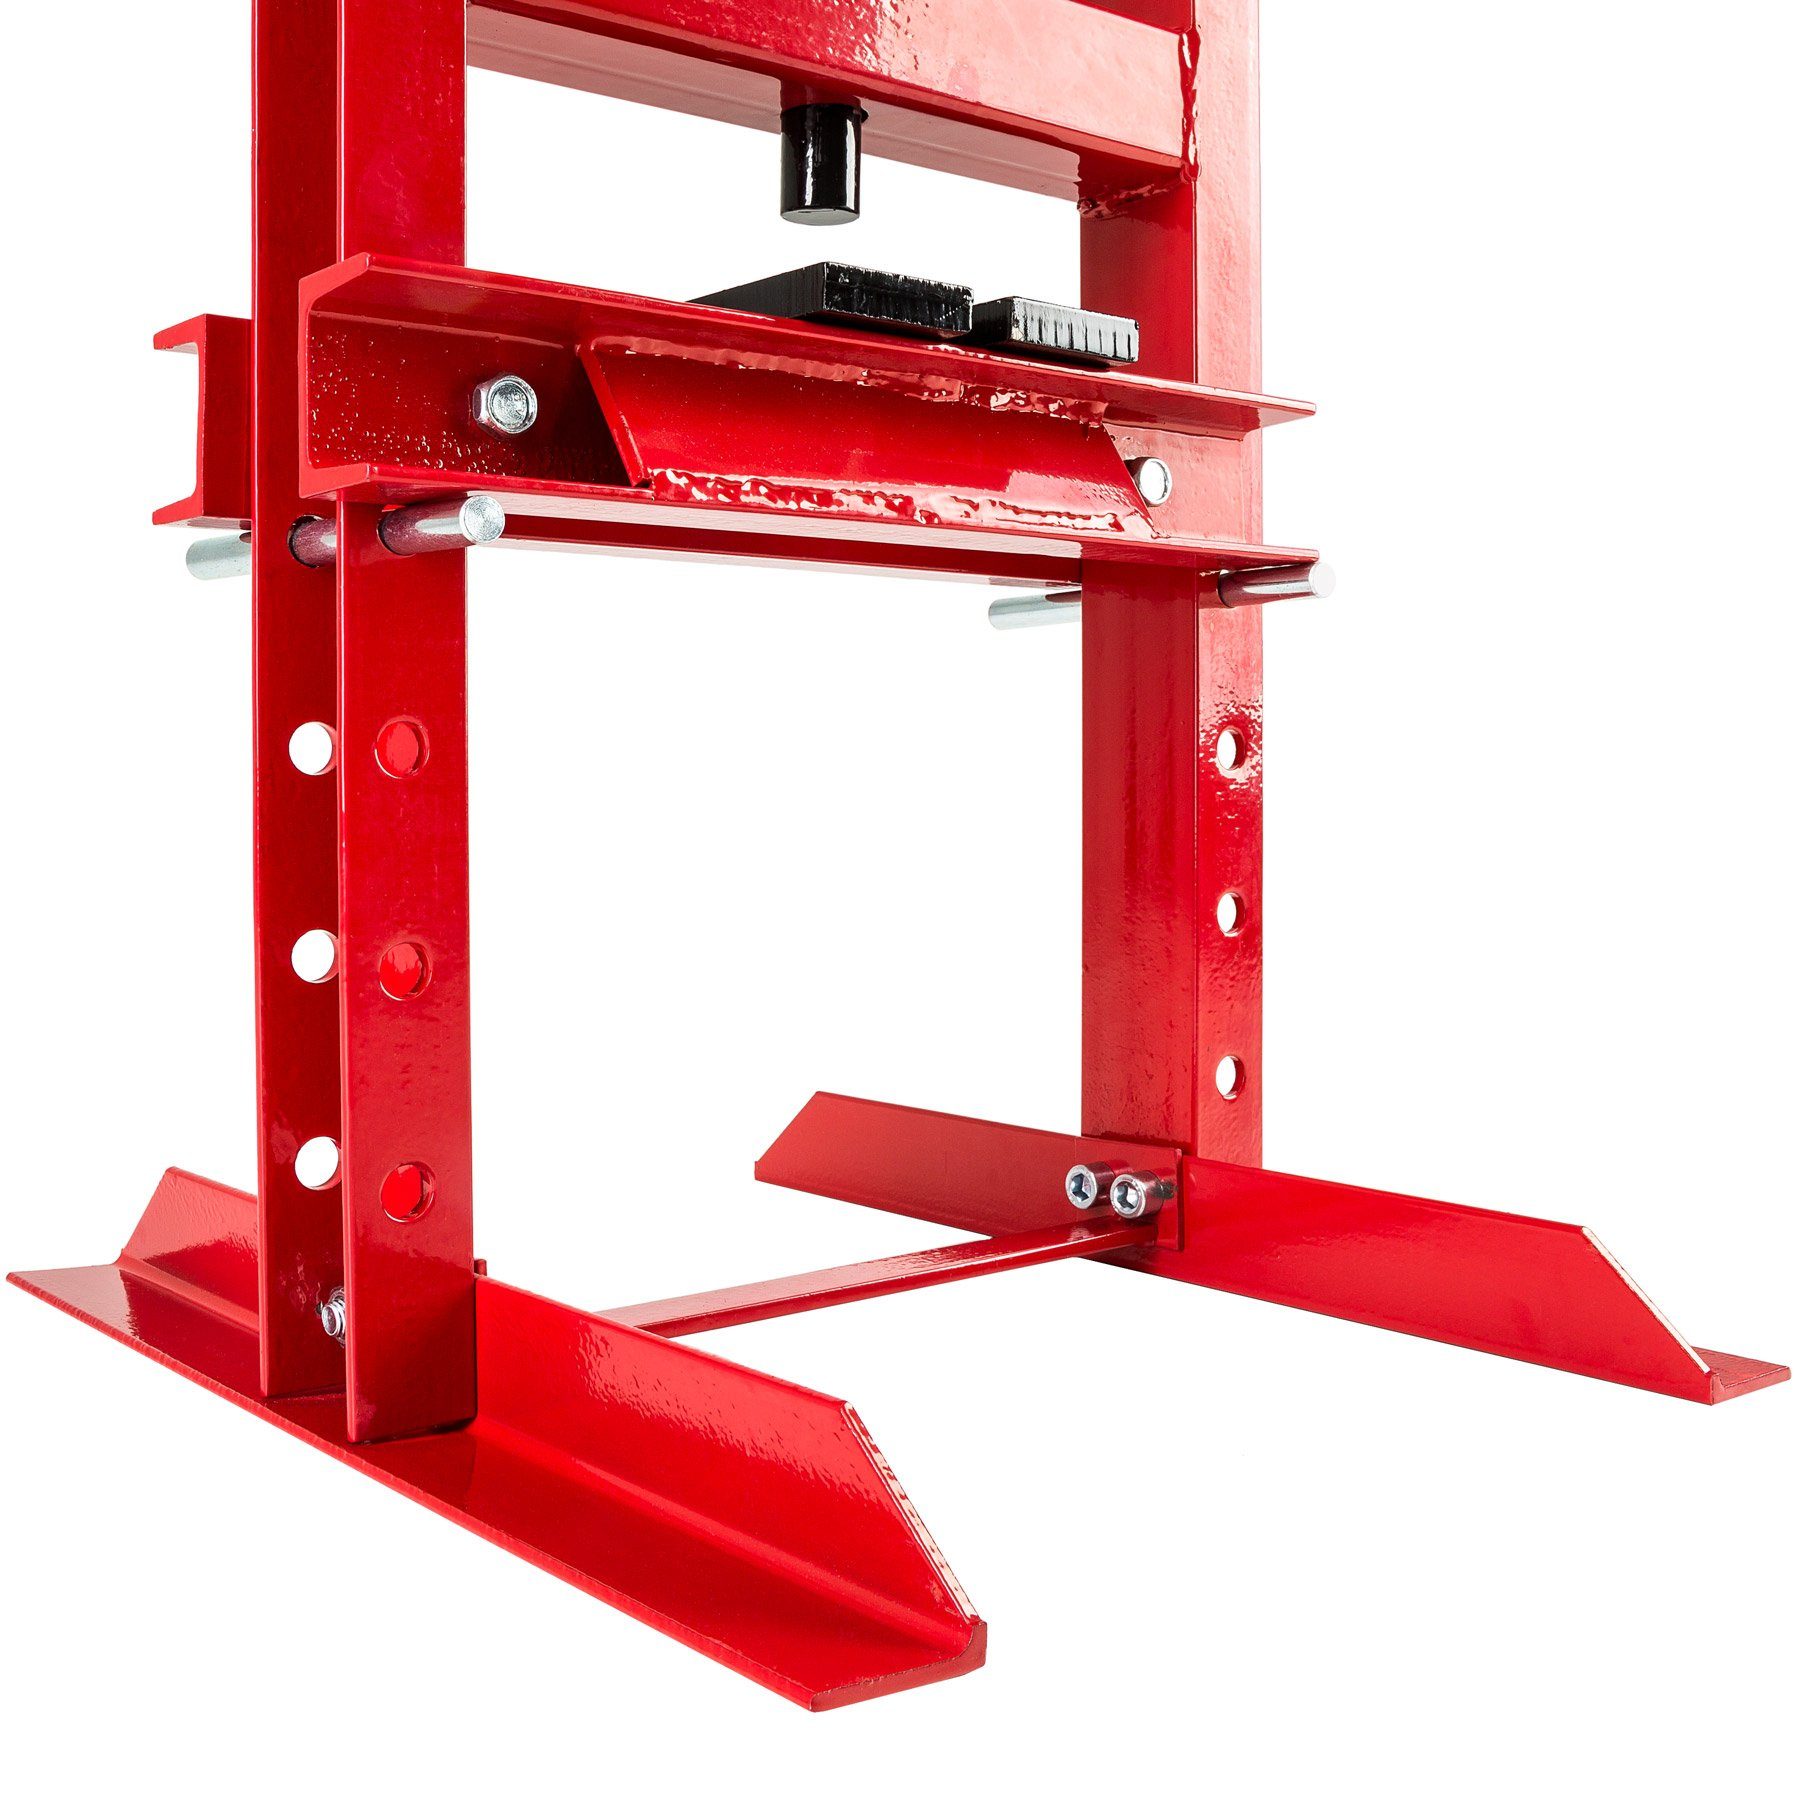 Werkstattpresse mit 6t tectake Pressdruck Hydraulikpresse